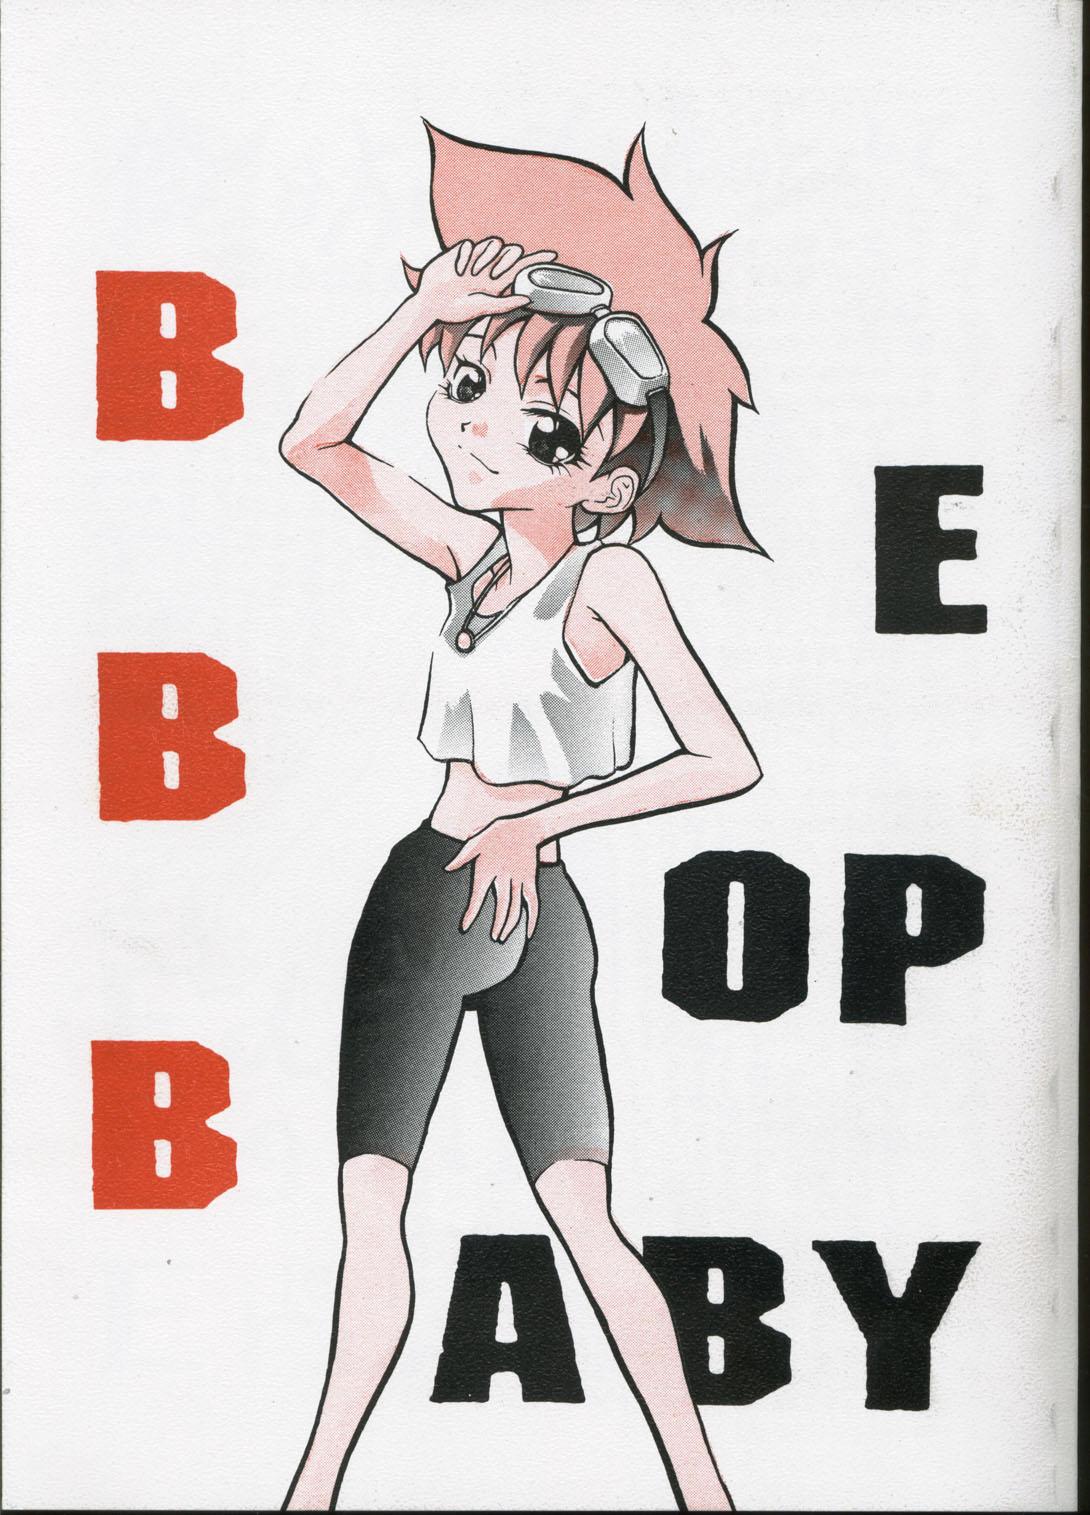 Bebop Baby B 0